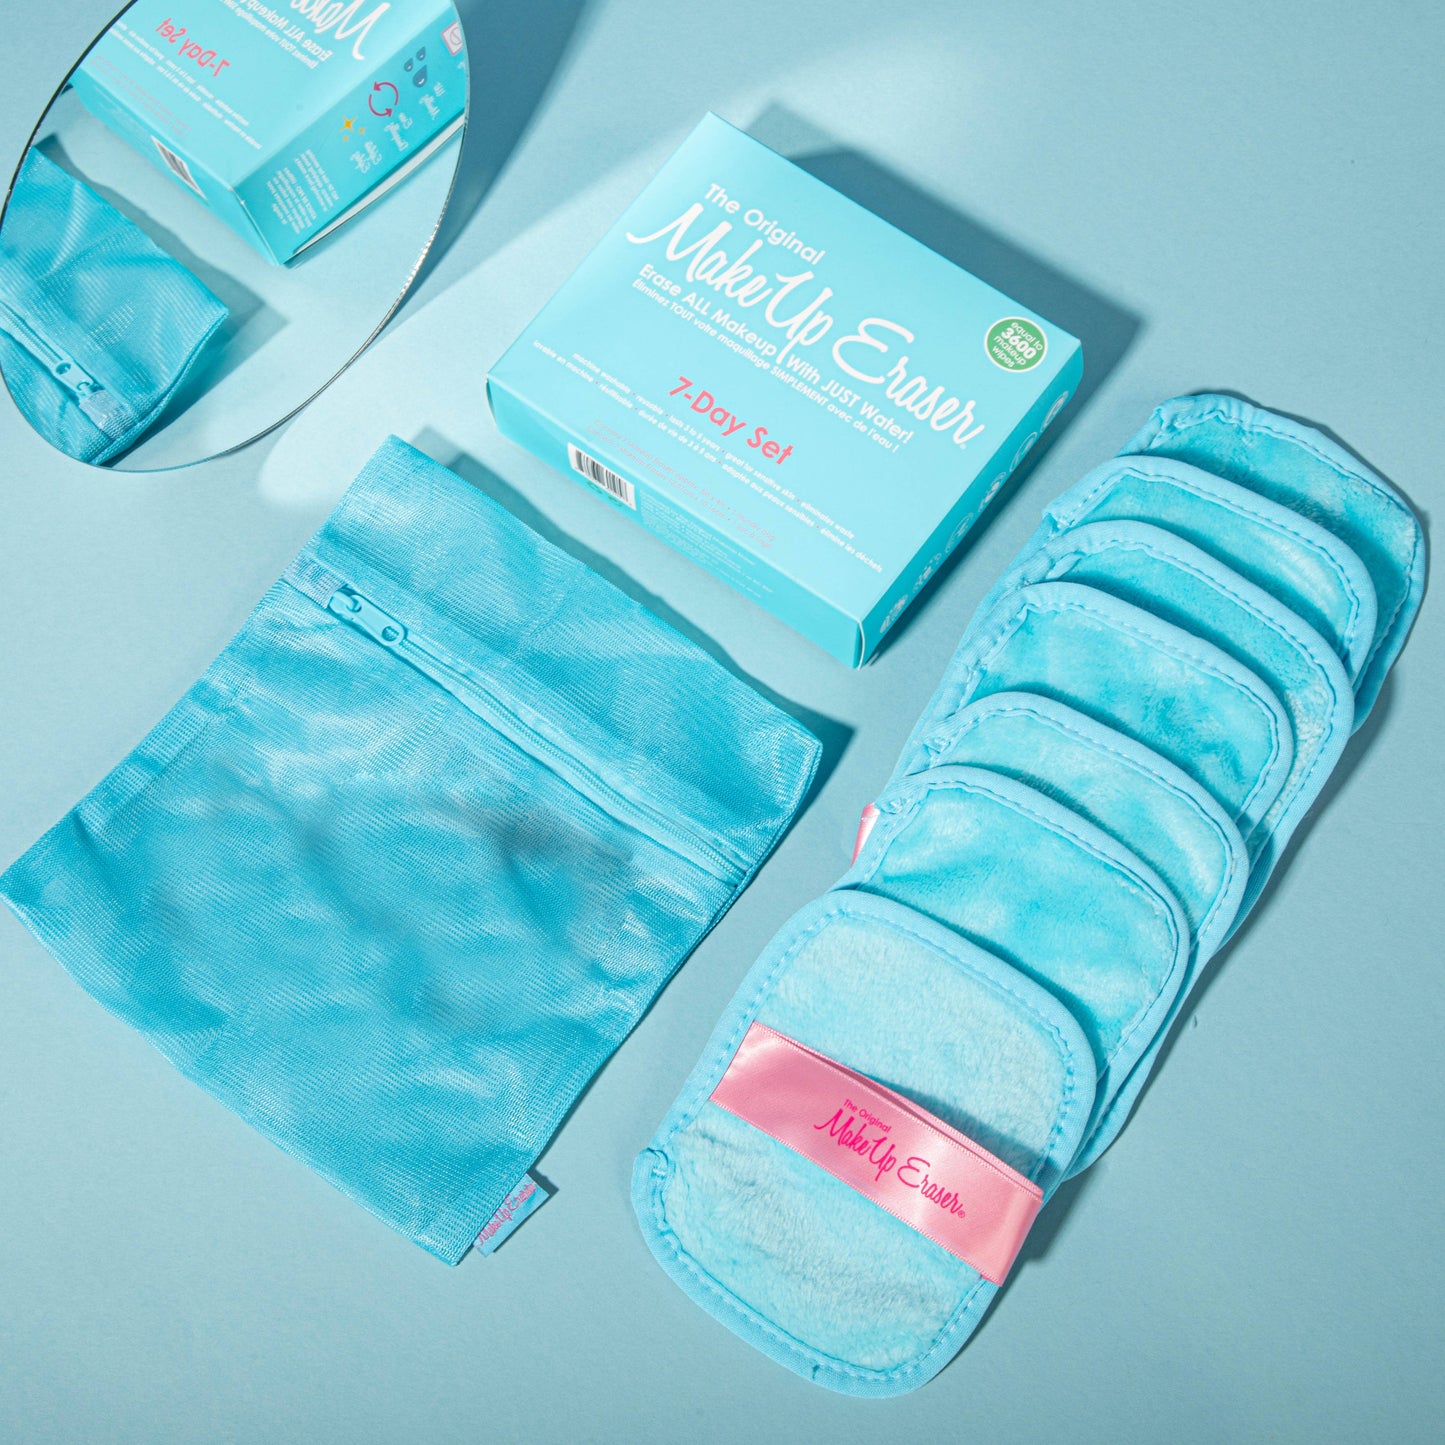 Chill Blue MakeUp Eraser 7-Day Set